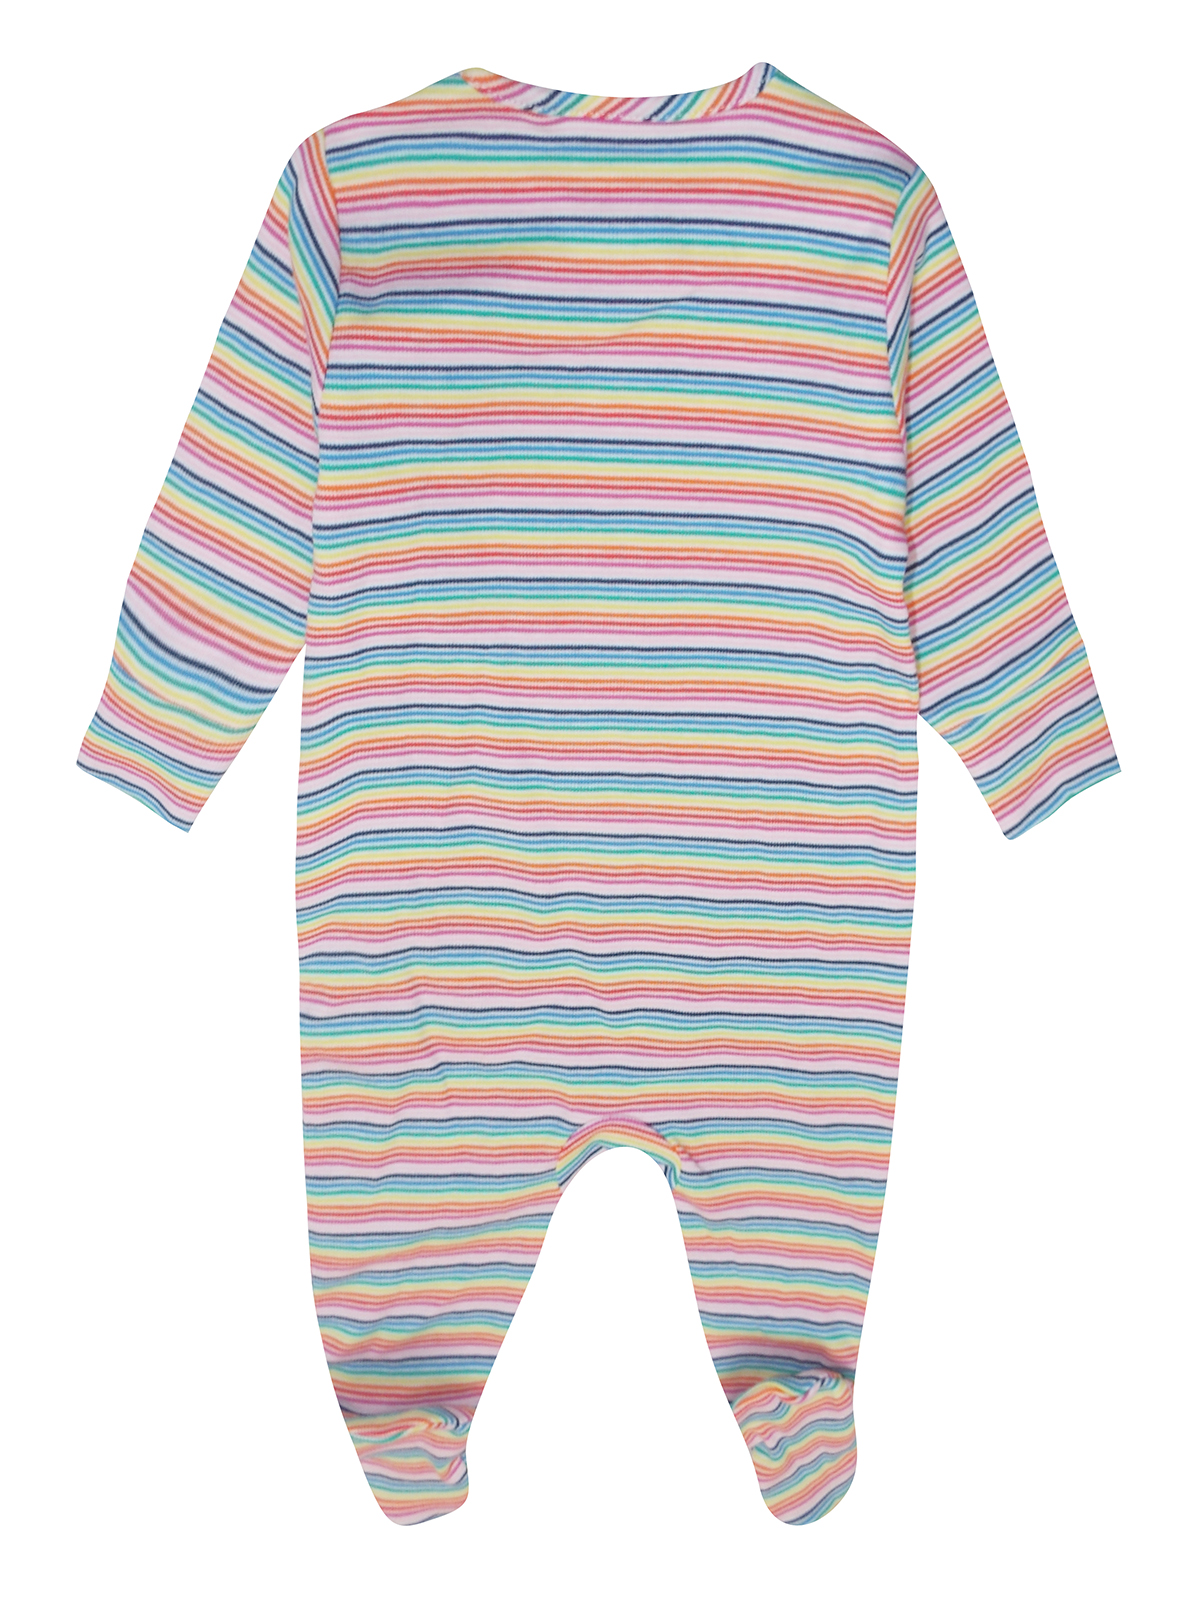 N3XT MULTI Unisex Baby Rainbow Striped Sleepsuit - Size 3M to 3/6M